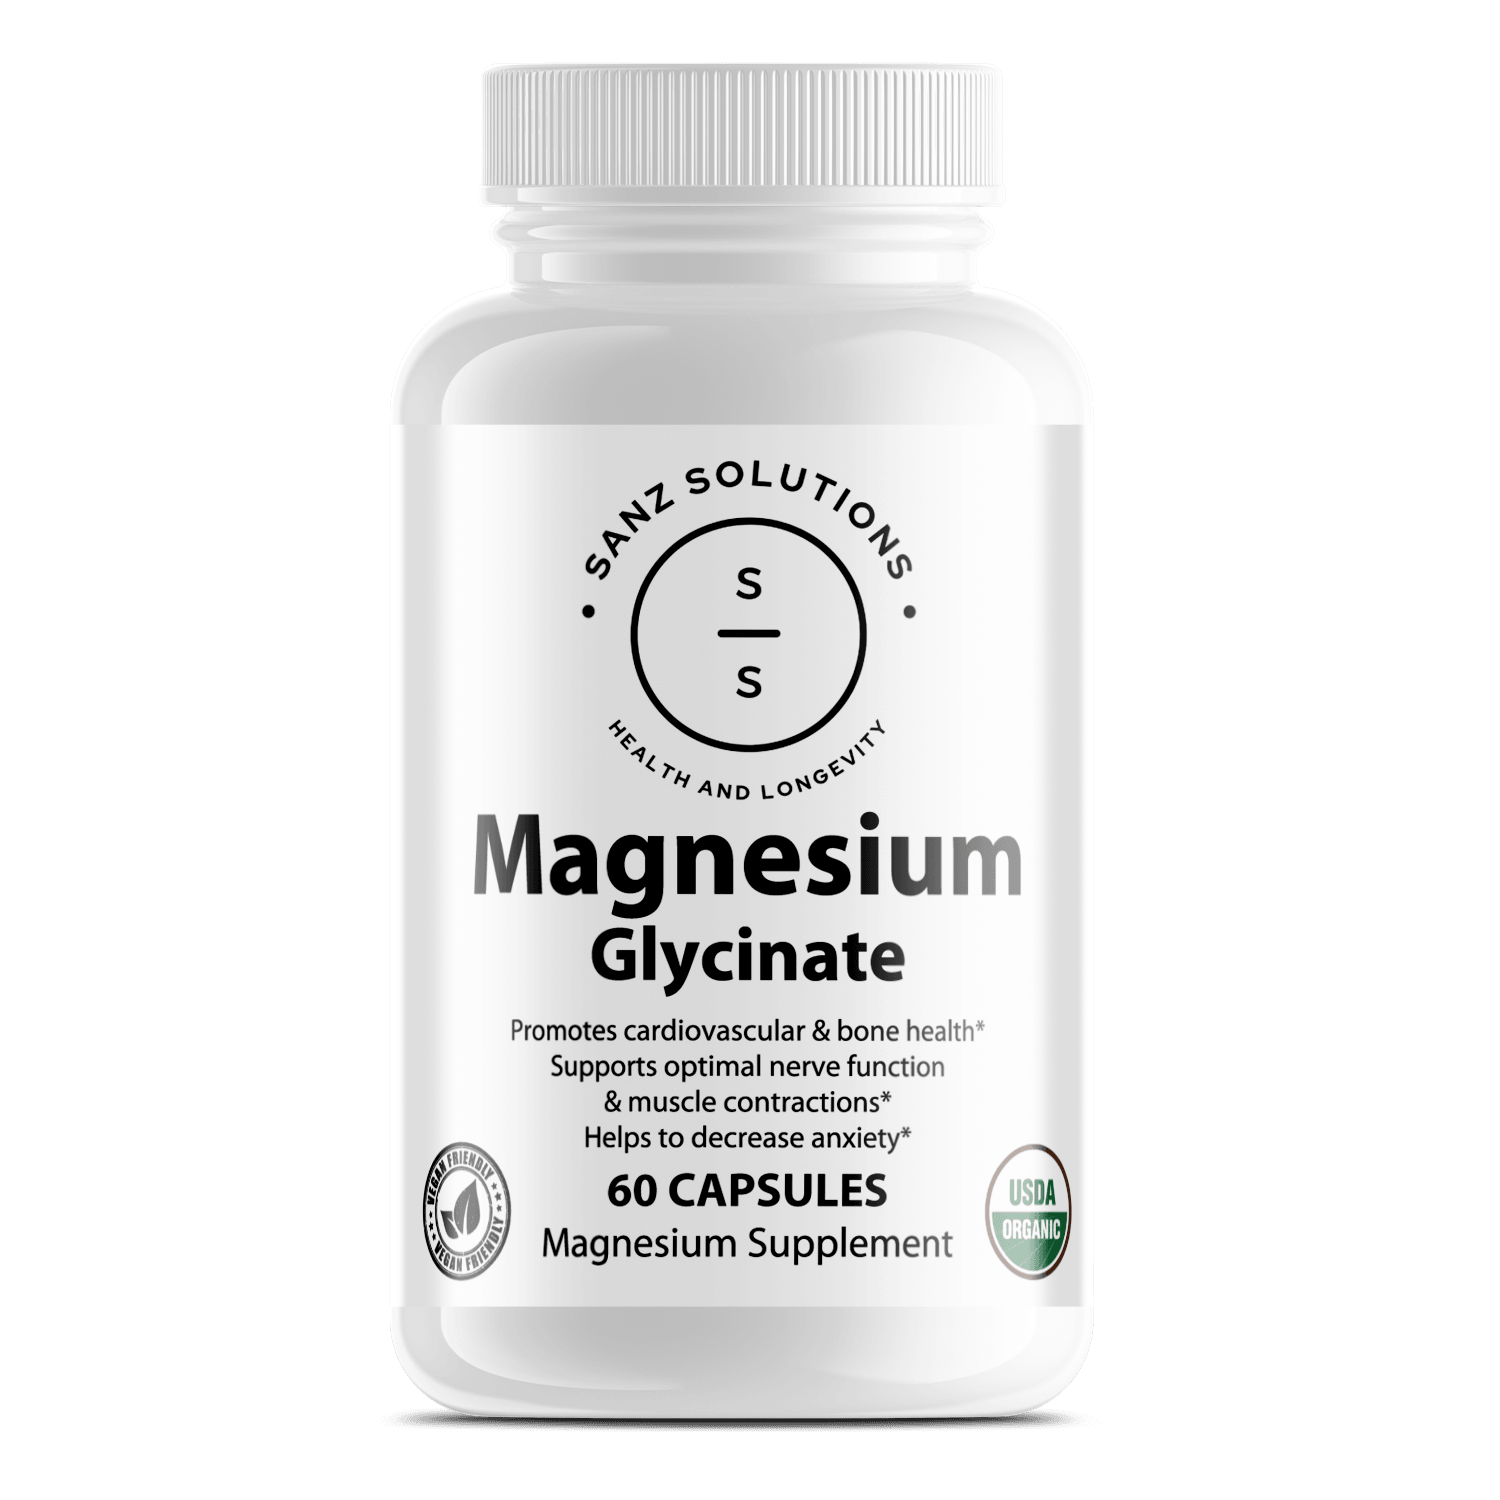 Magnesium Glycinate - Sanz Solutions Health and Longevity